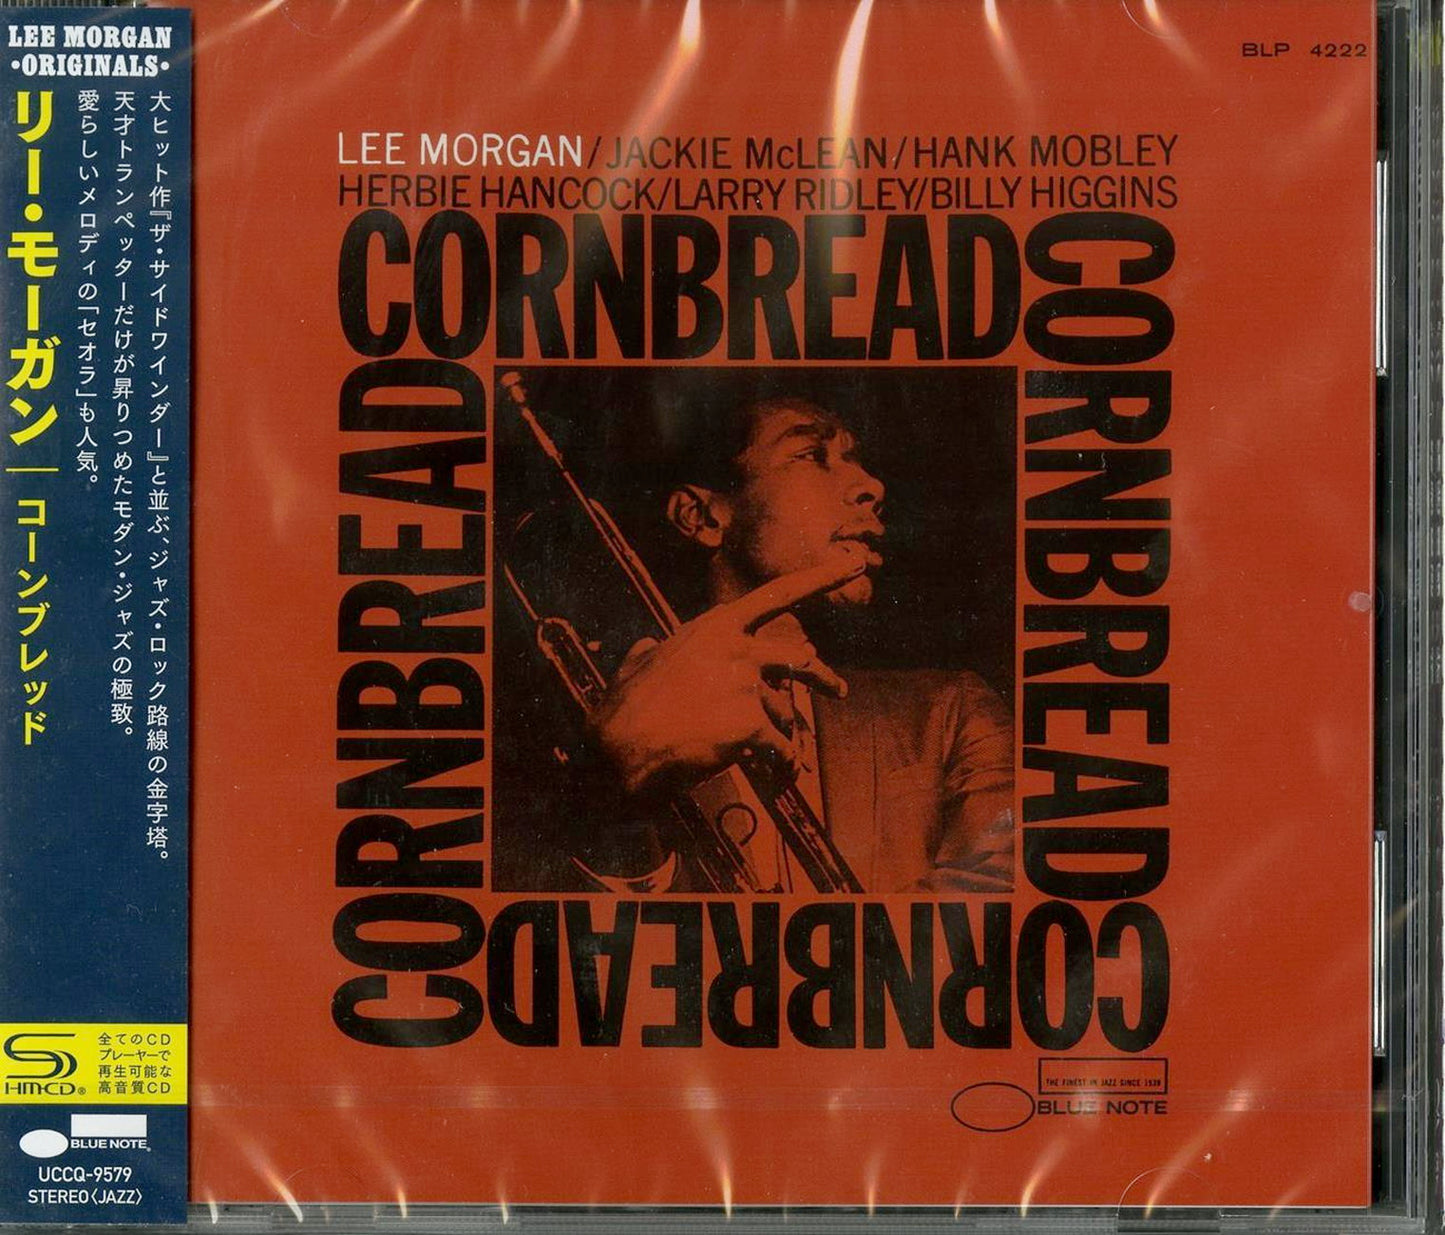 Lee Morgan - Cornbread - Japan  SHM-CD Limited Edition